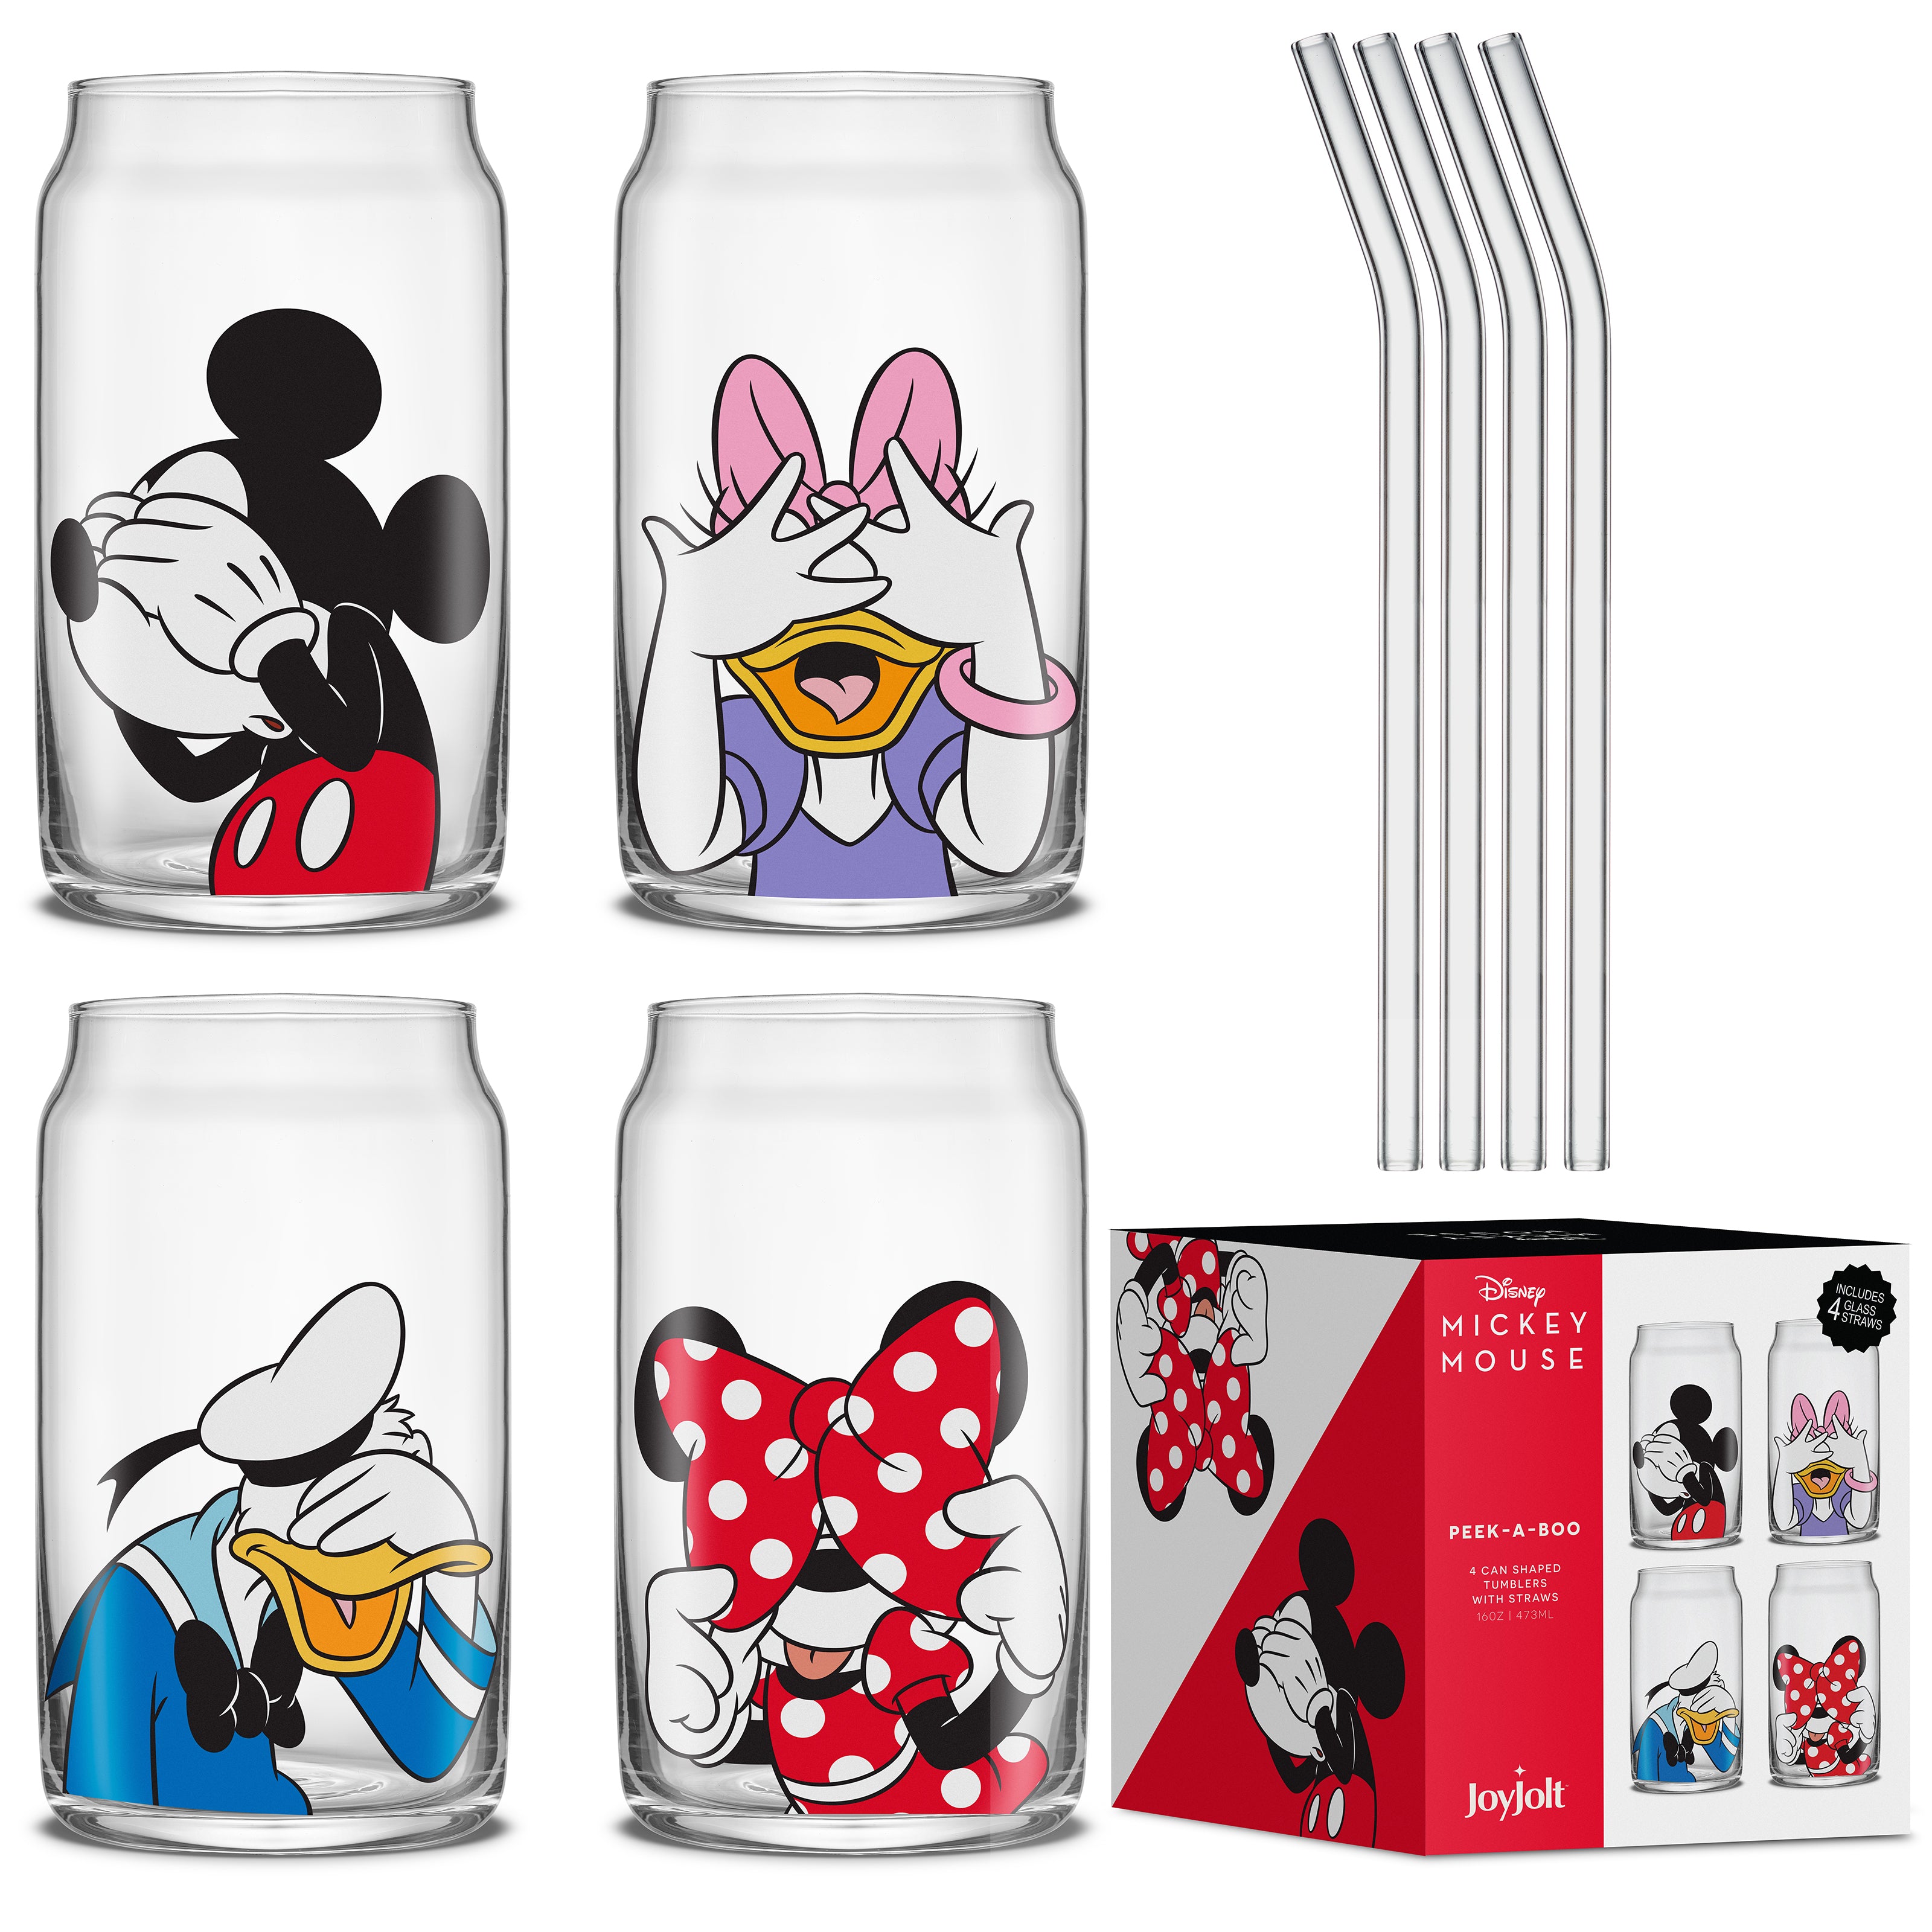 Disney Mickey Mouse & Friends Peek-a-Boo Tumbler Glasses